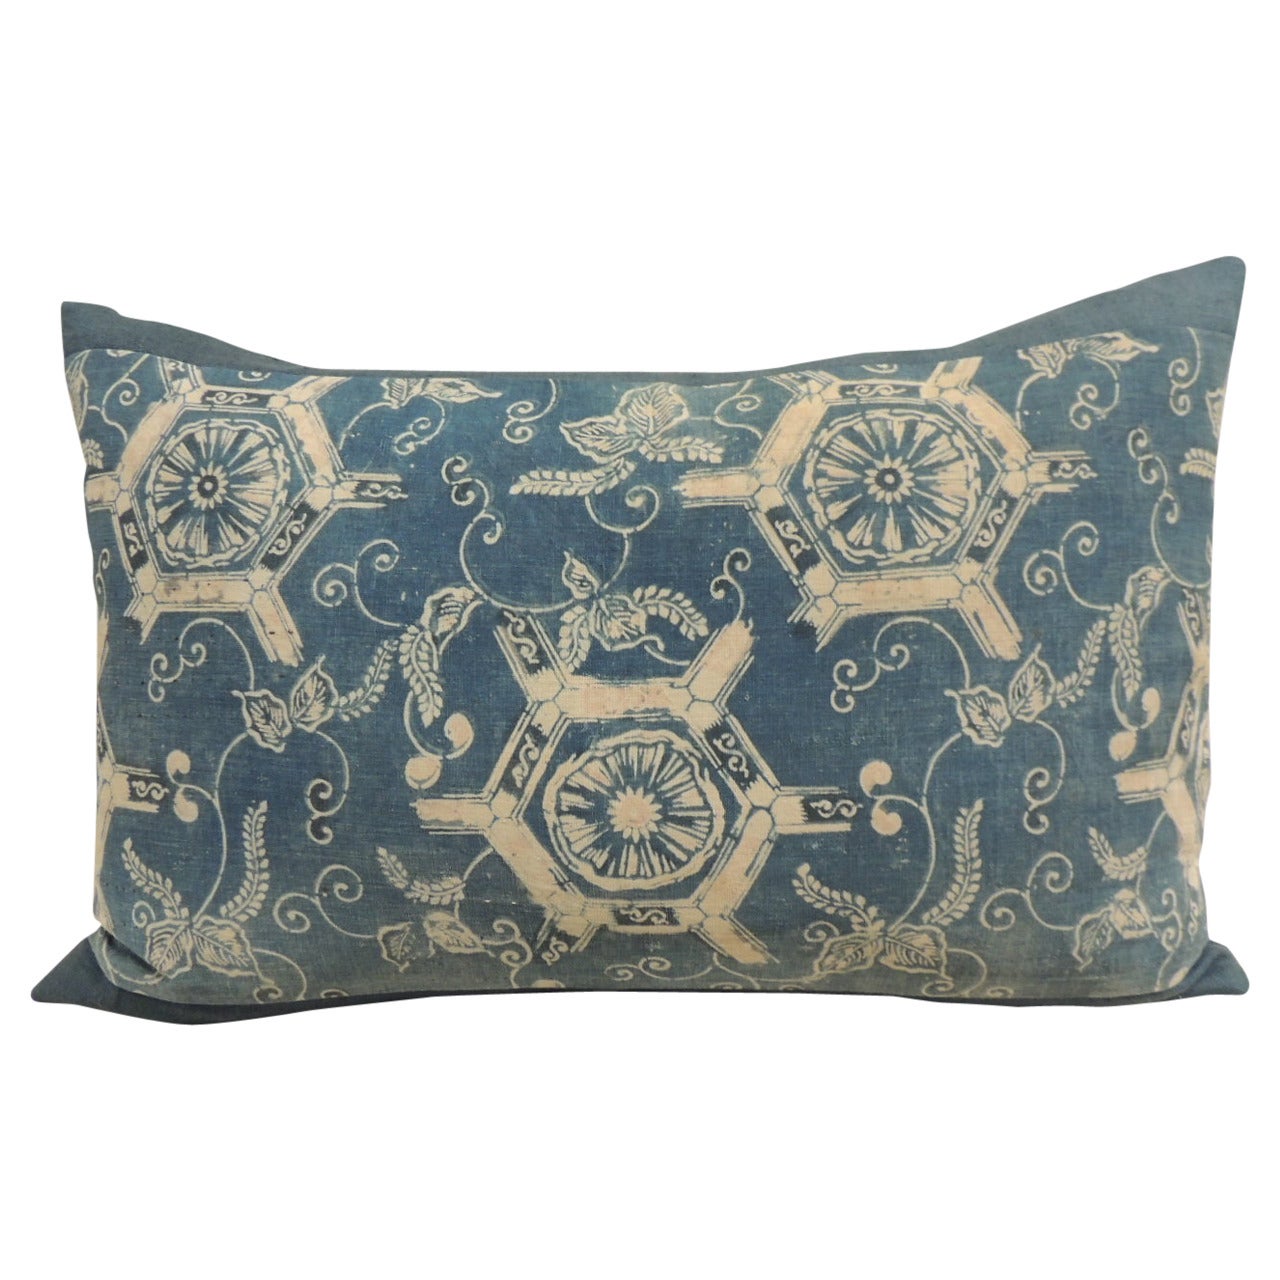 Japanese Indigo Printed Bolster Pillow